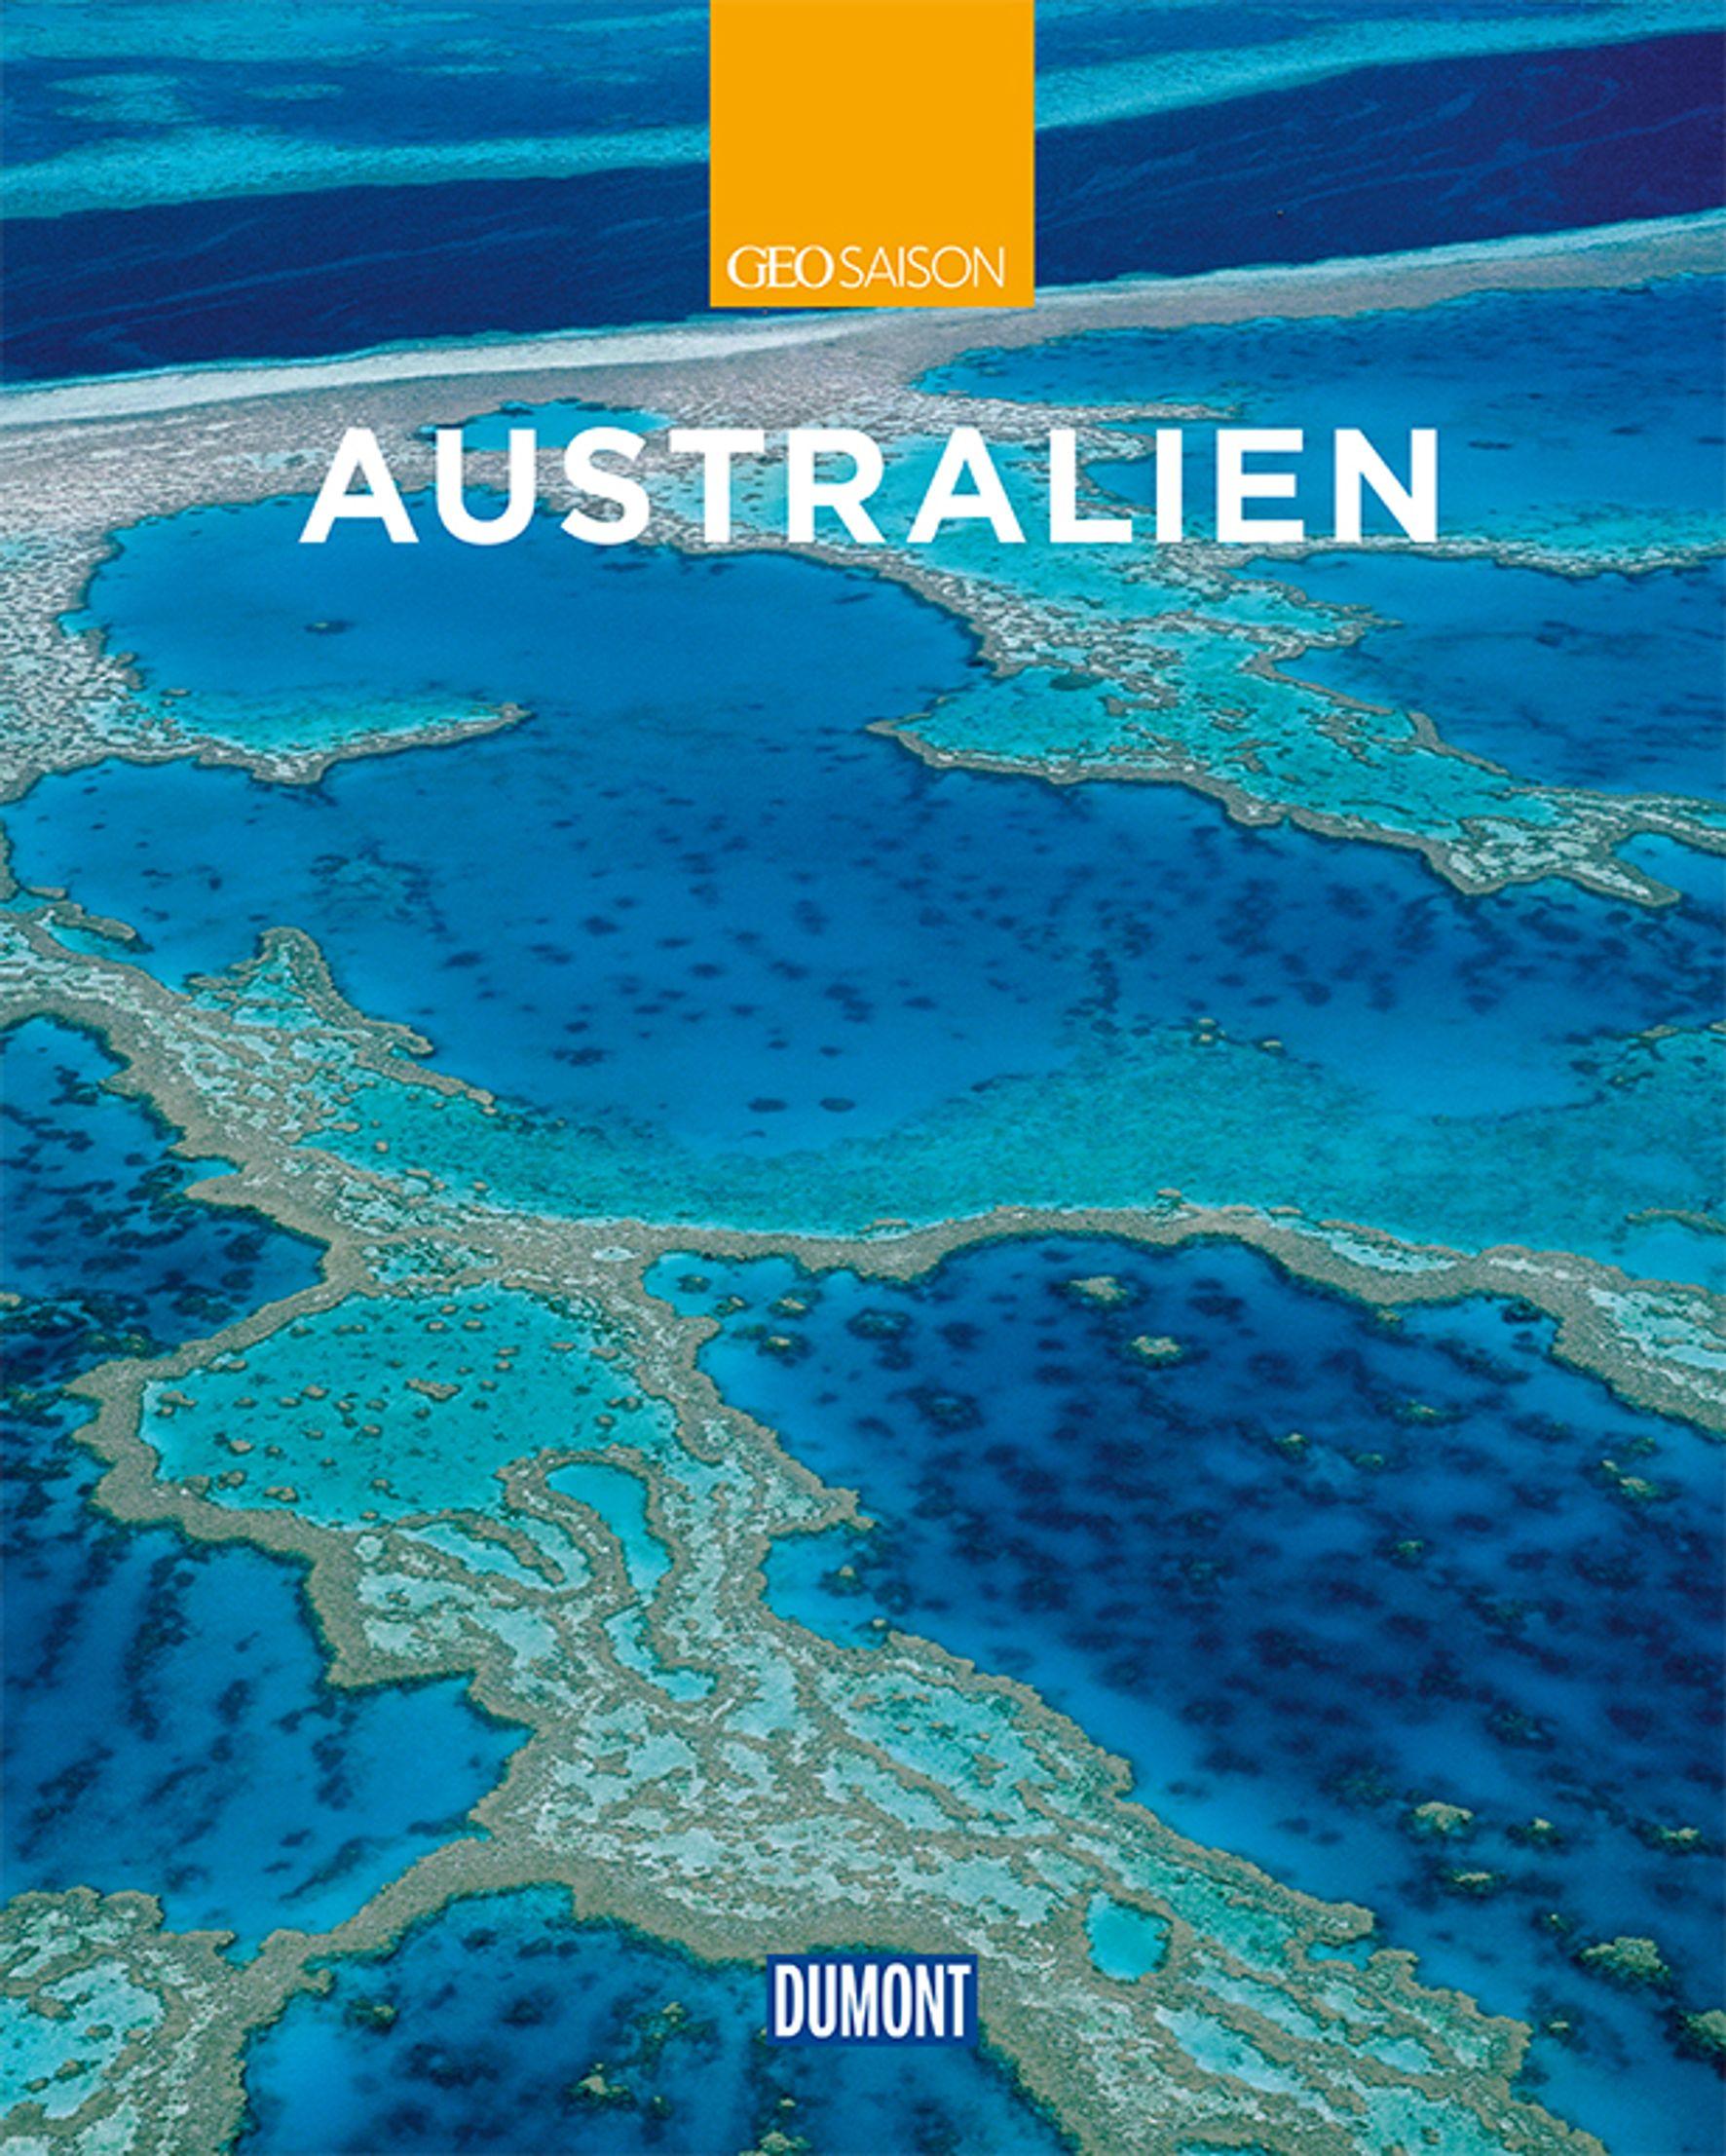 DuMont Travel Picture Book Australia | Roland Dusik | 9783770188994 - Picture 1 of 1